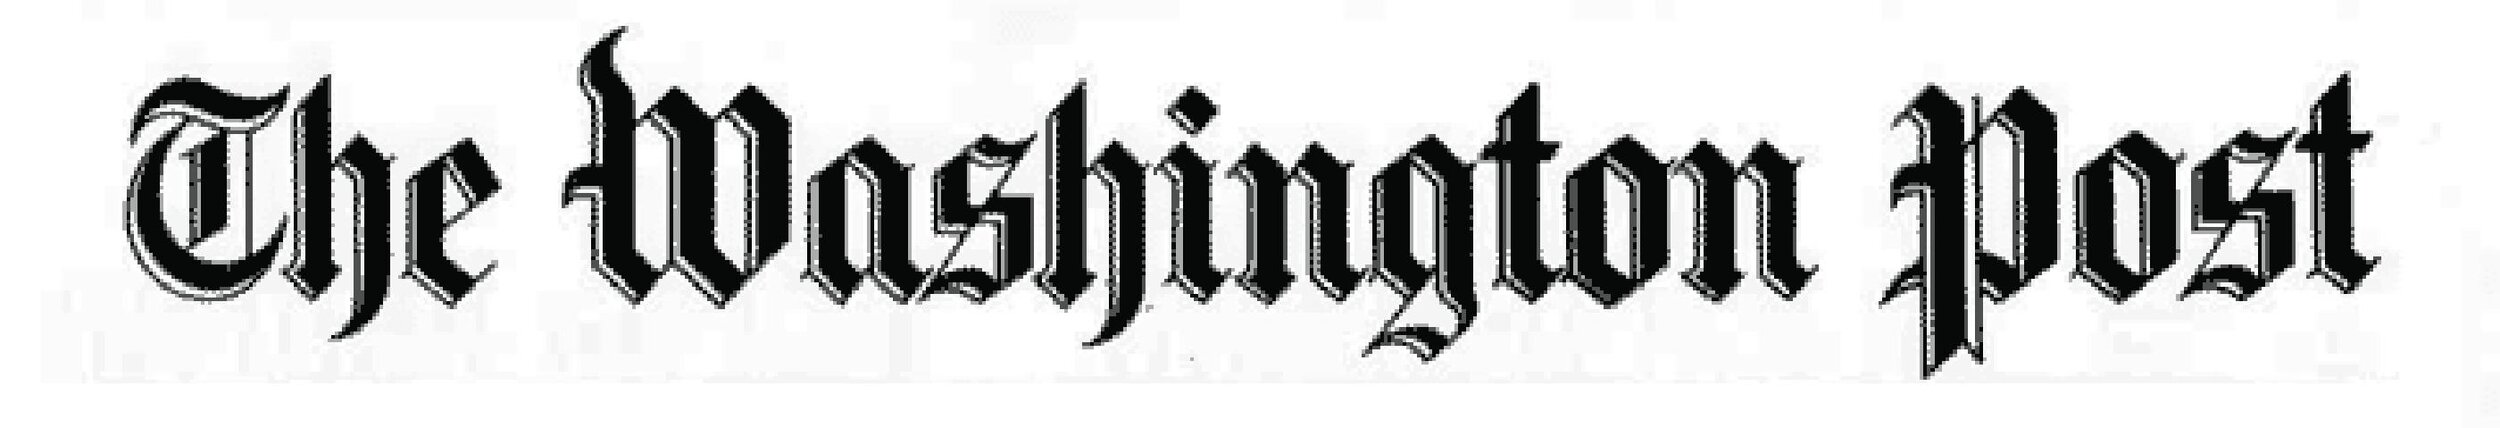 Washington-Post-Logo.jpg